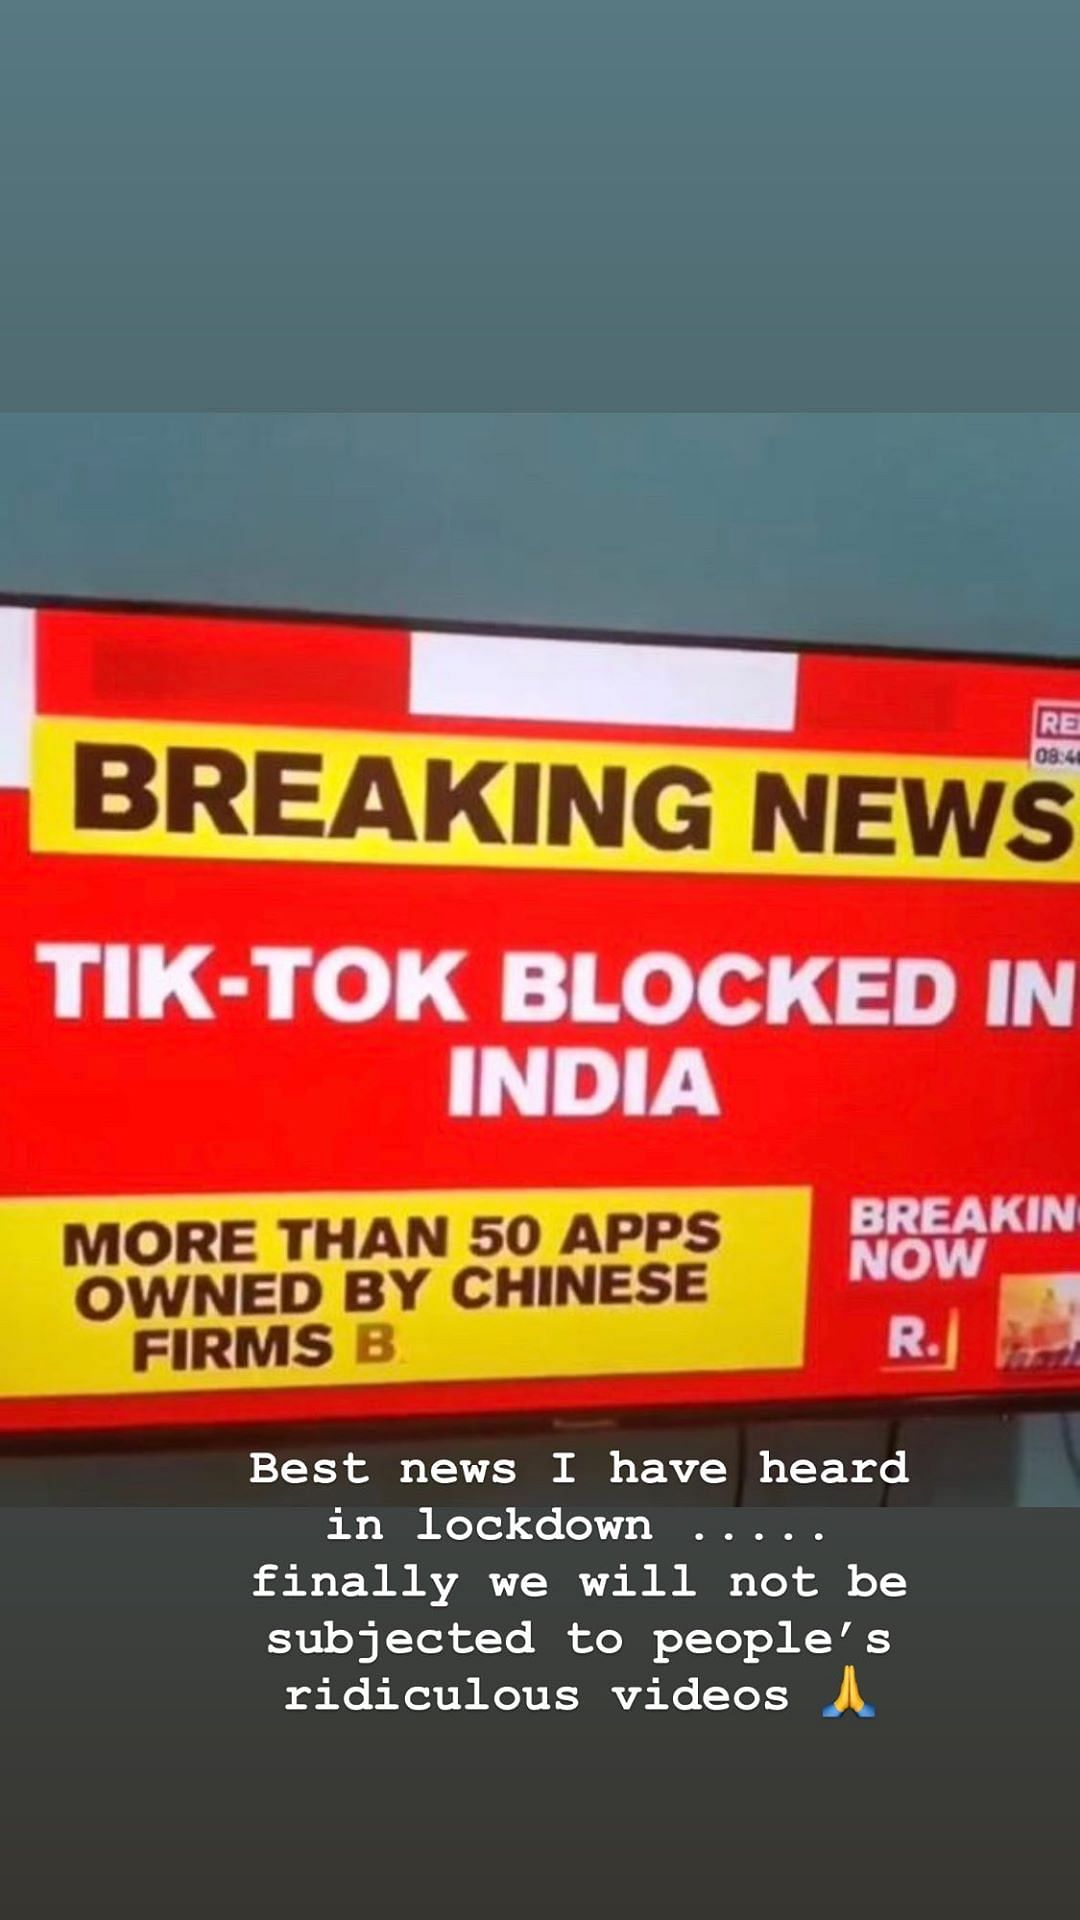 Best News in Lockdown: Malaika Arora Reacts to TikTok Ban